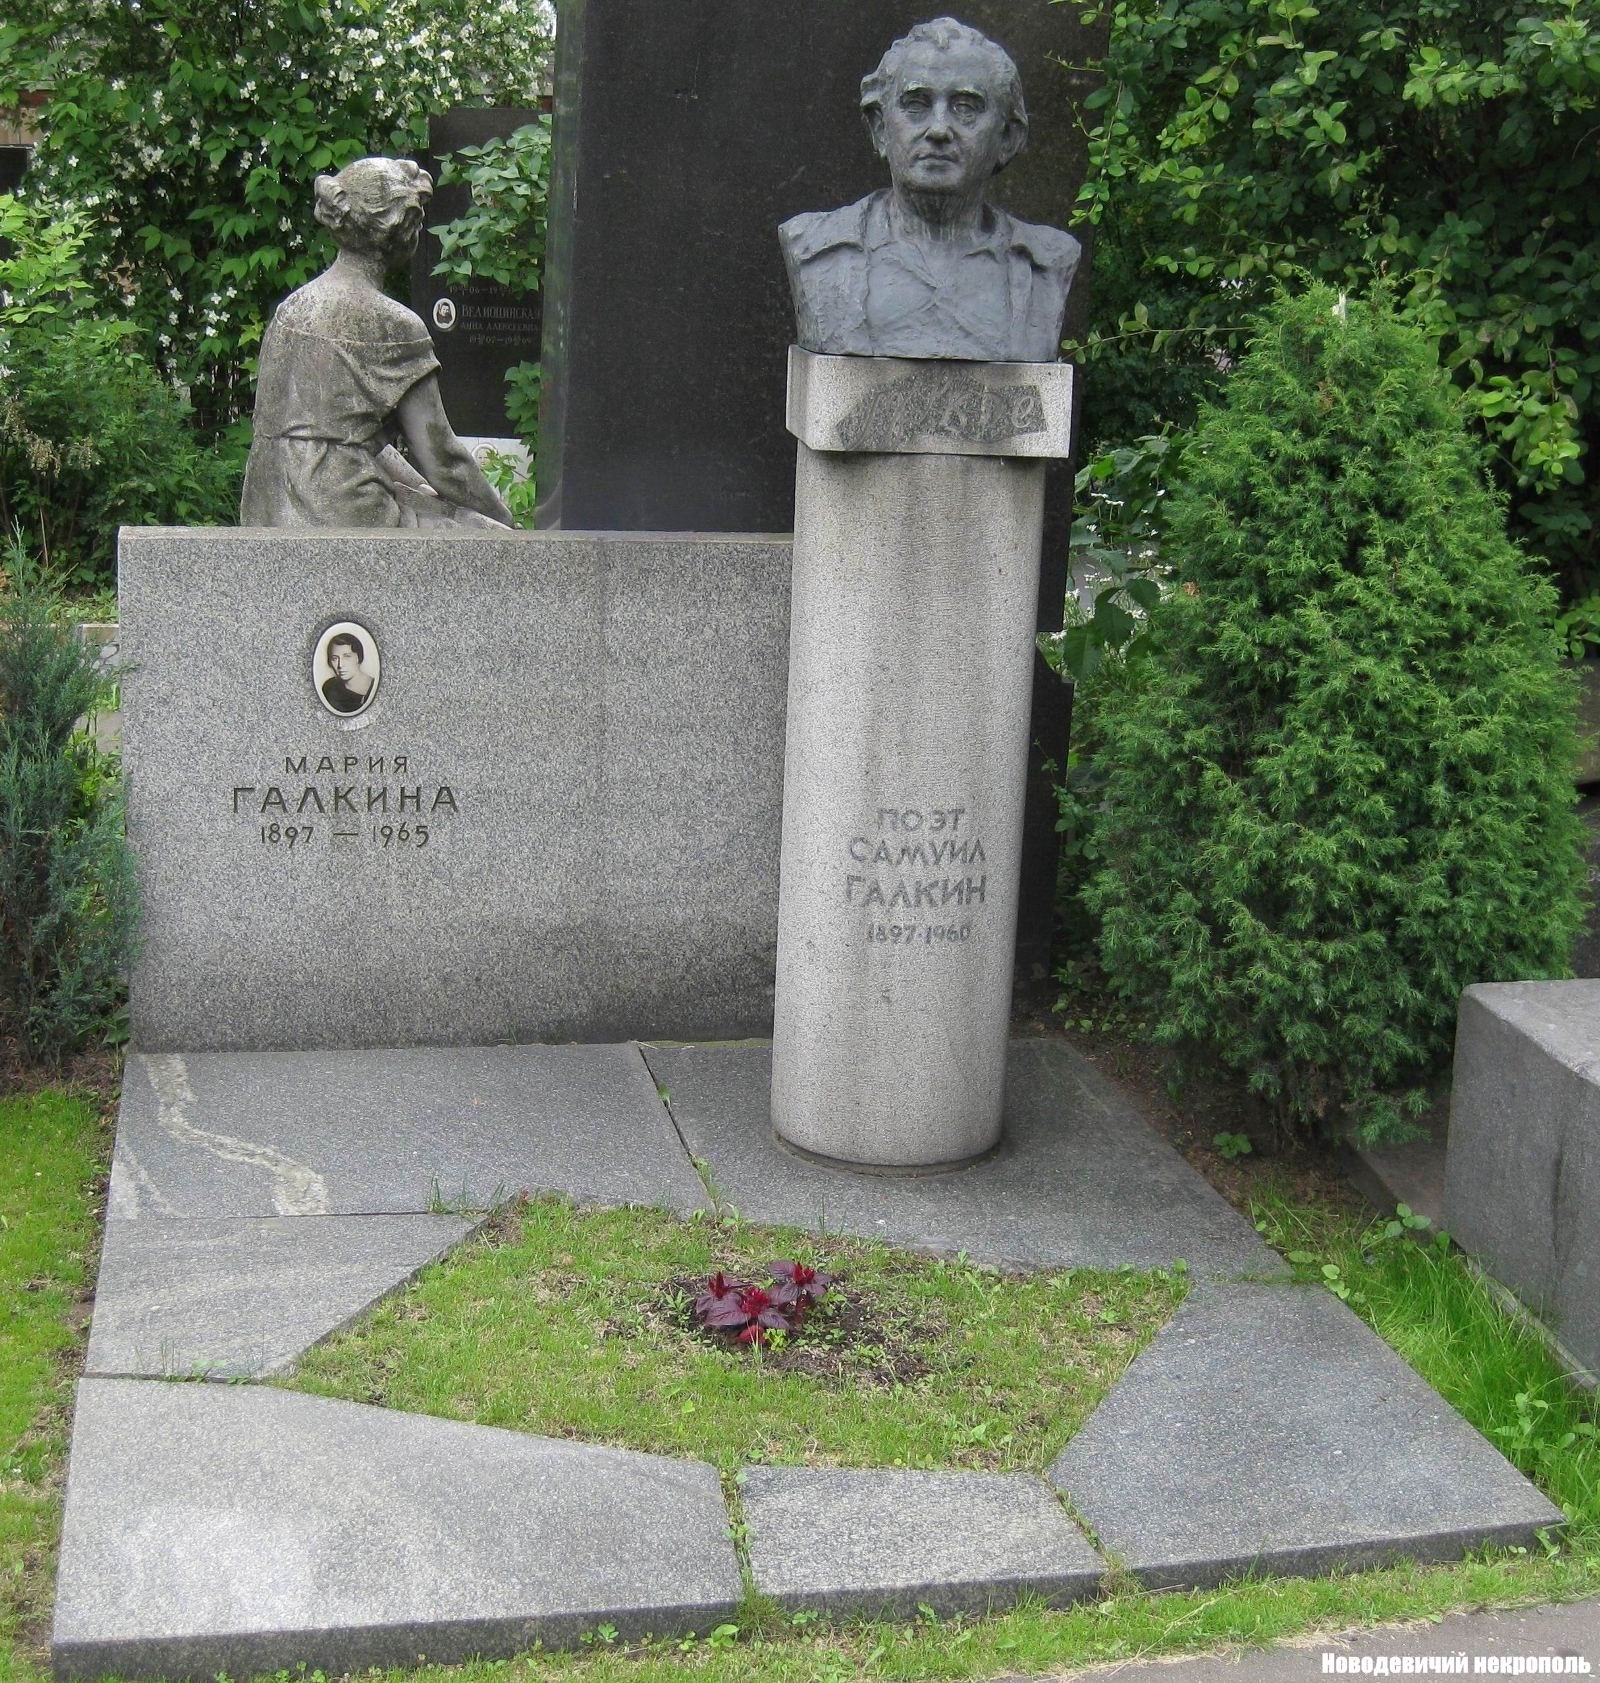 Памятник на могиле Галкина С.З. (1897-1960), ск. М.Галкина, арх. А.Усачёв, на Новодевичьем кладбище (8-6-15).